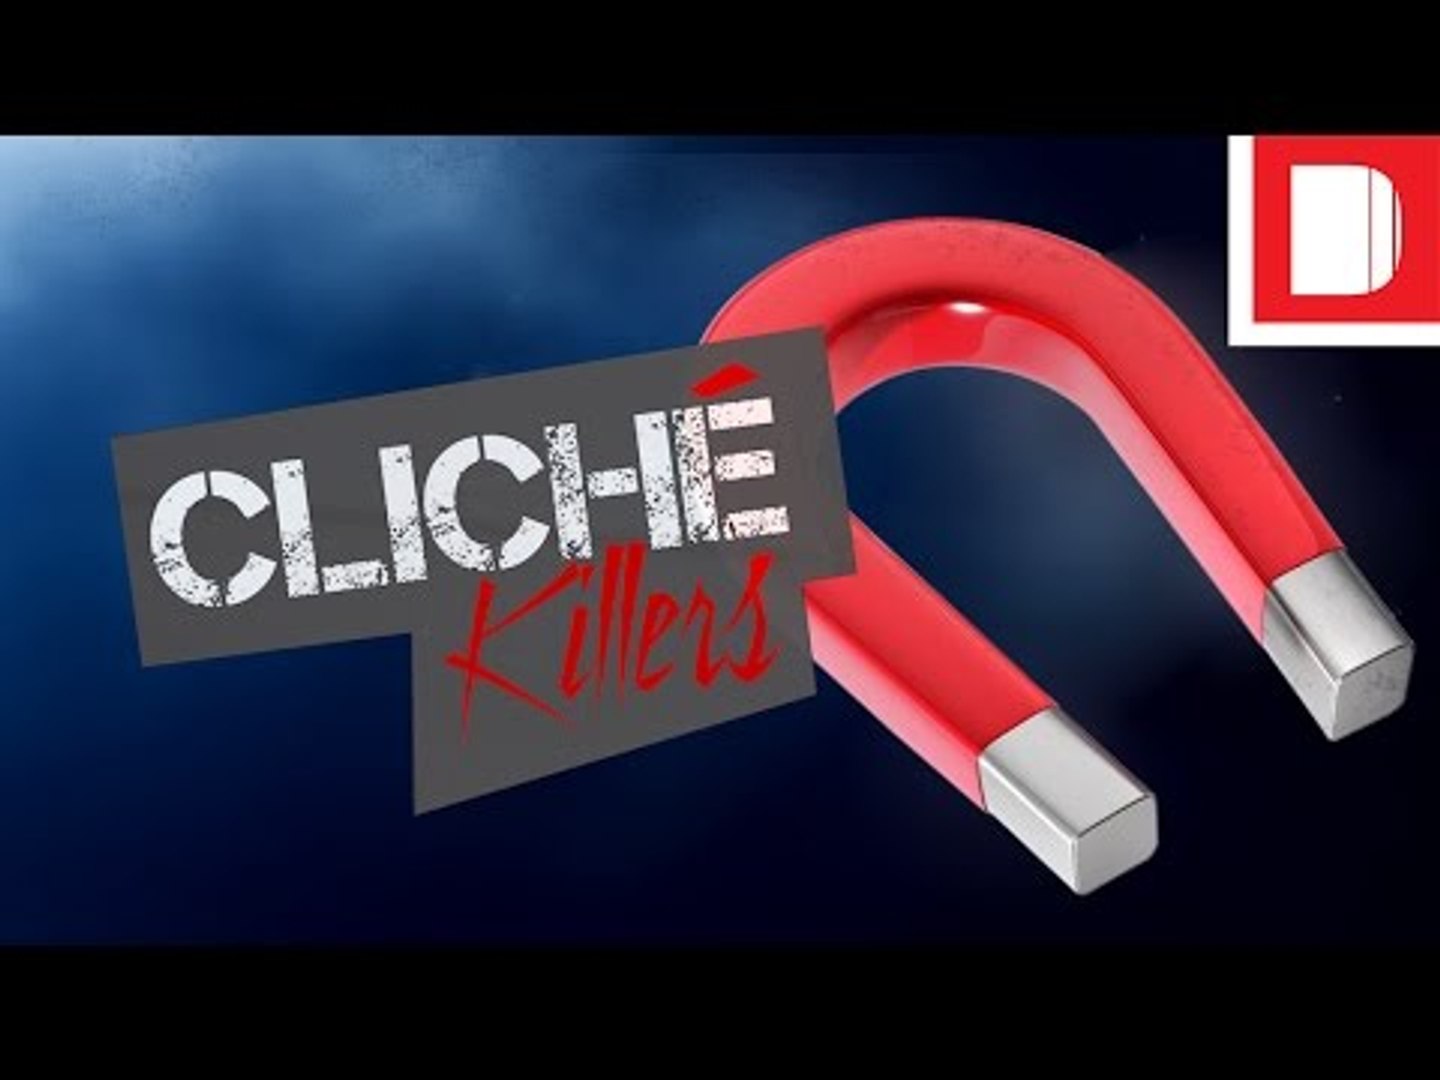 ⁣Cliché Killers | The Magnet